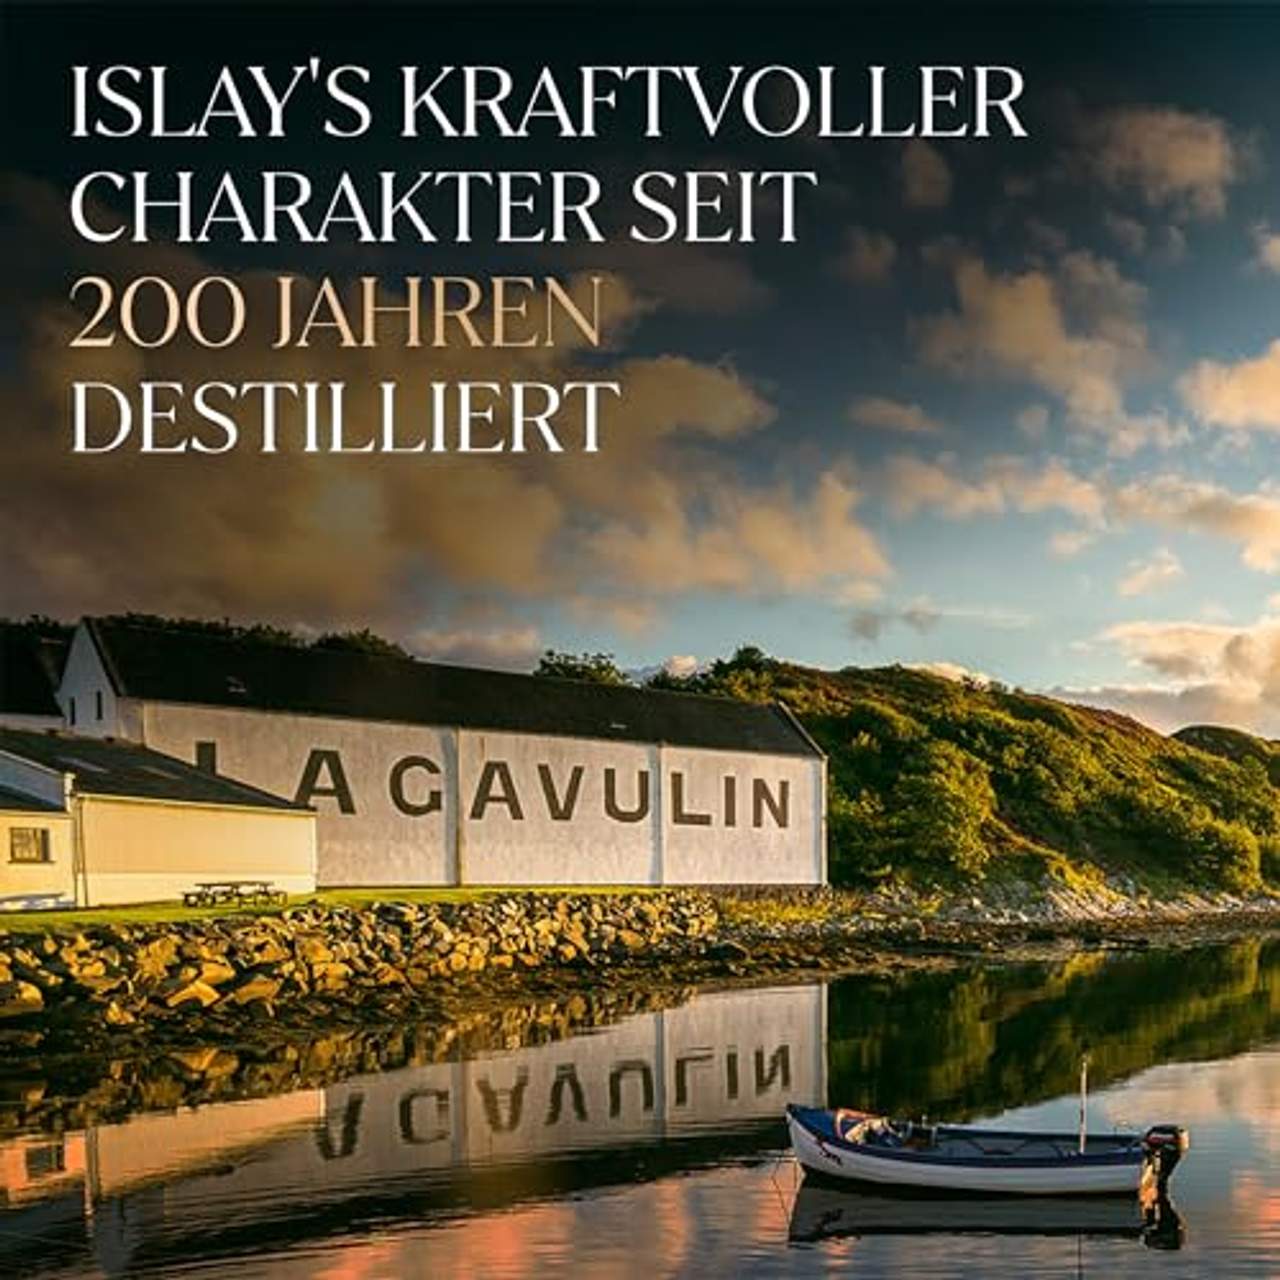 Lagavulin 16 Jahre Islay Single Malt Scotch Whisky